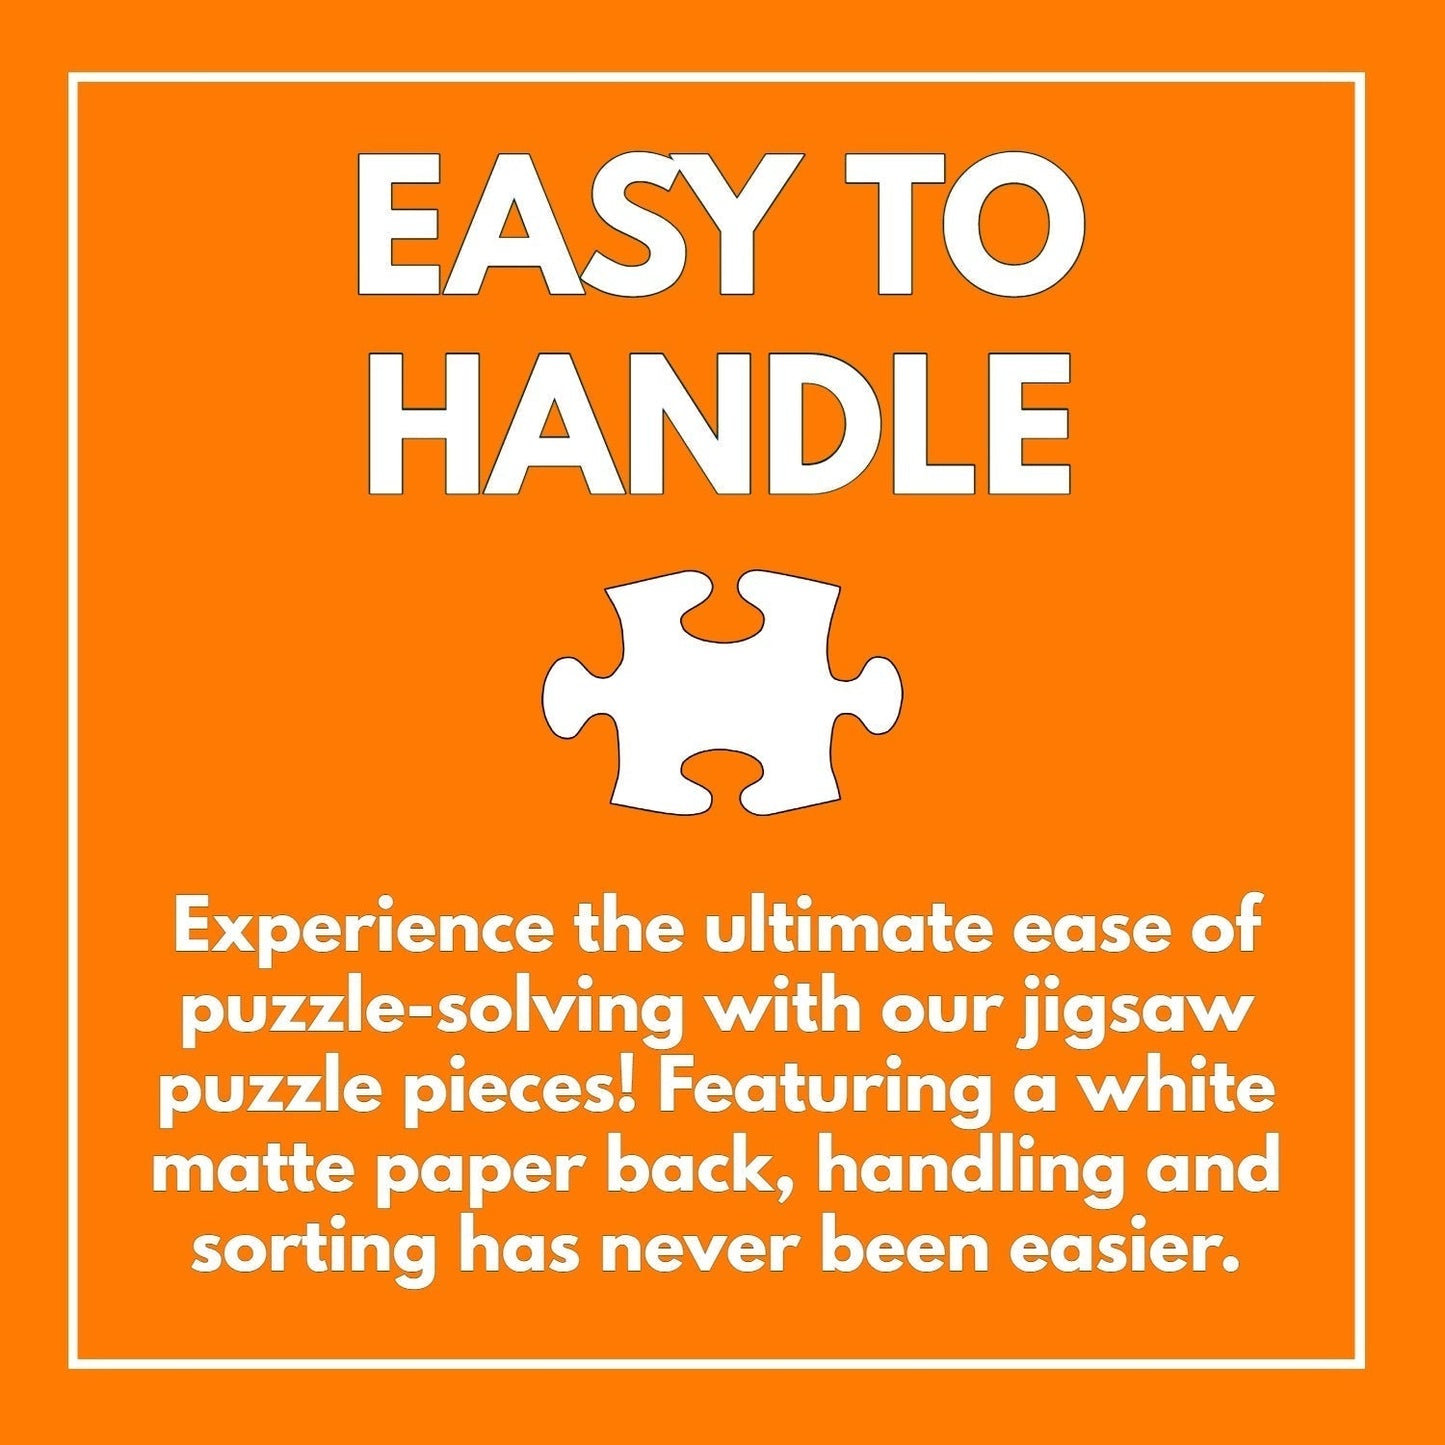 Geometric Dog Dreamscape - 1000 Piece Jigsaw Puzzle